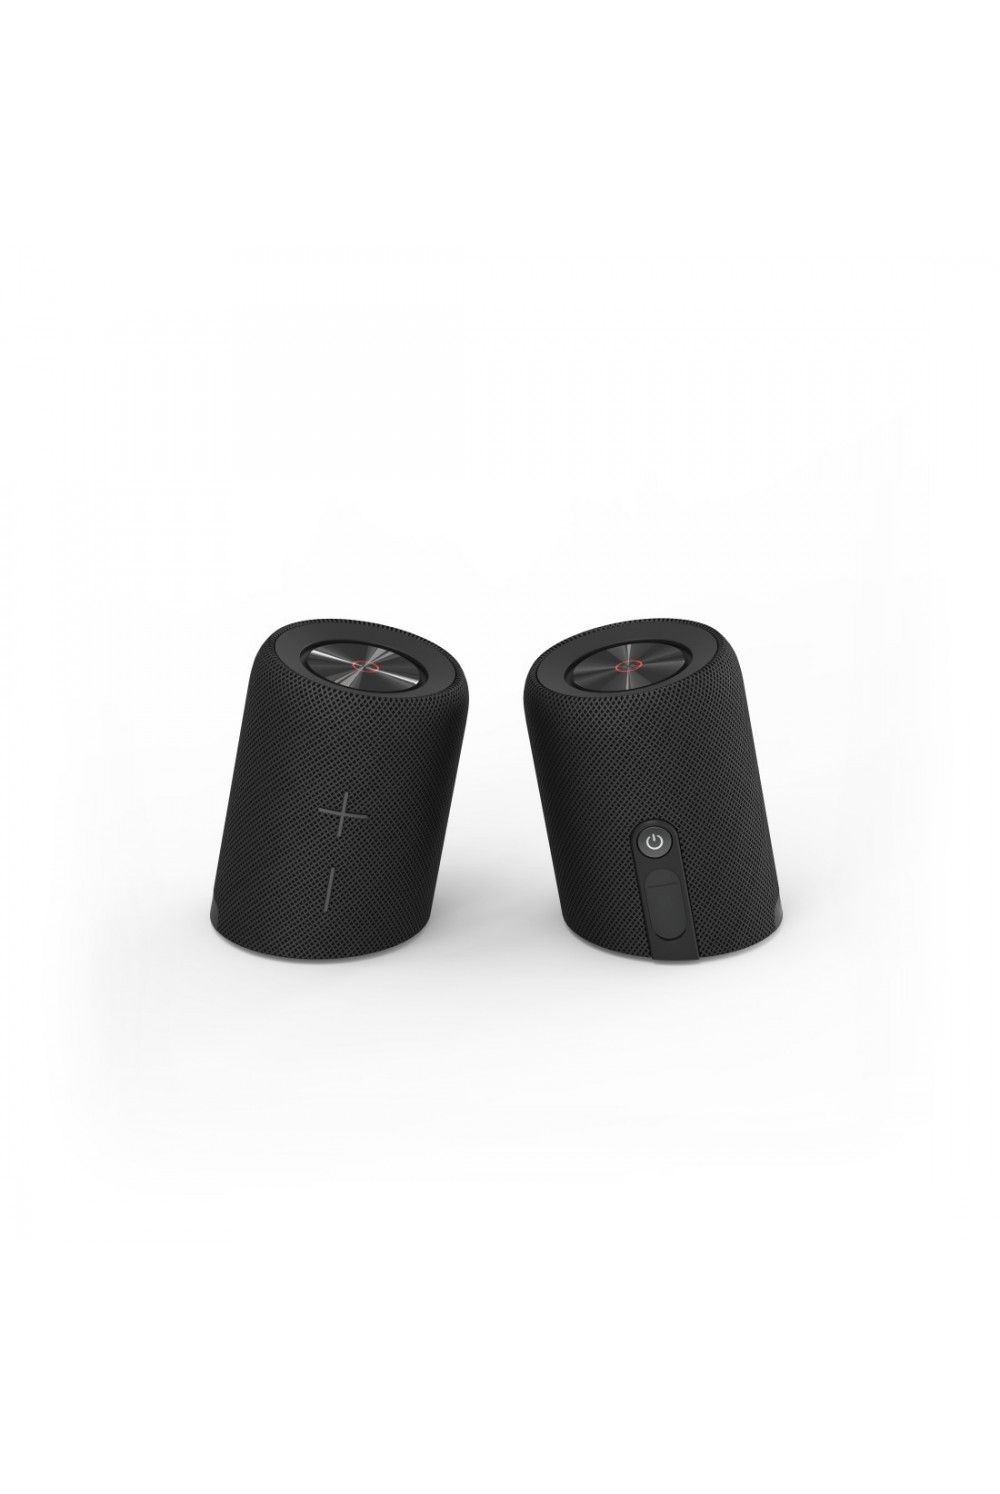 Haut-parleur Bluetooth Hama Twin 2.0